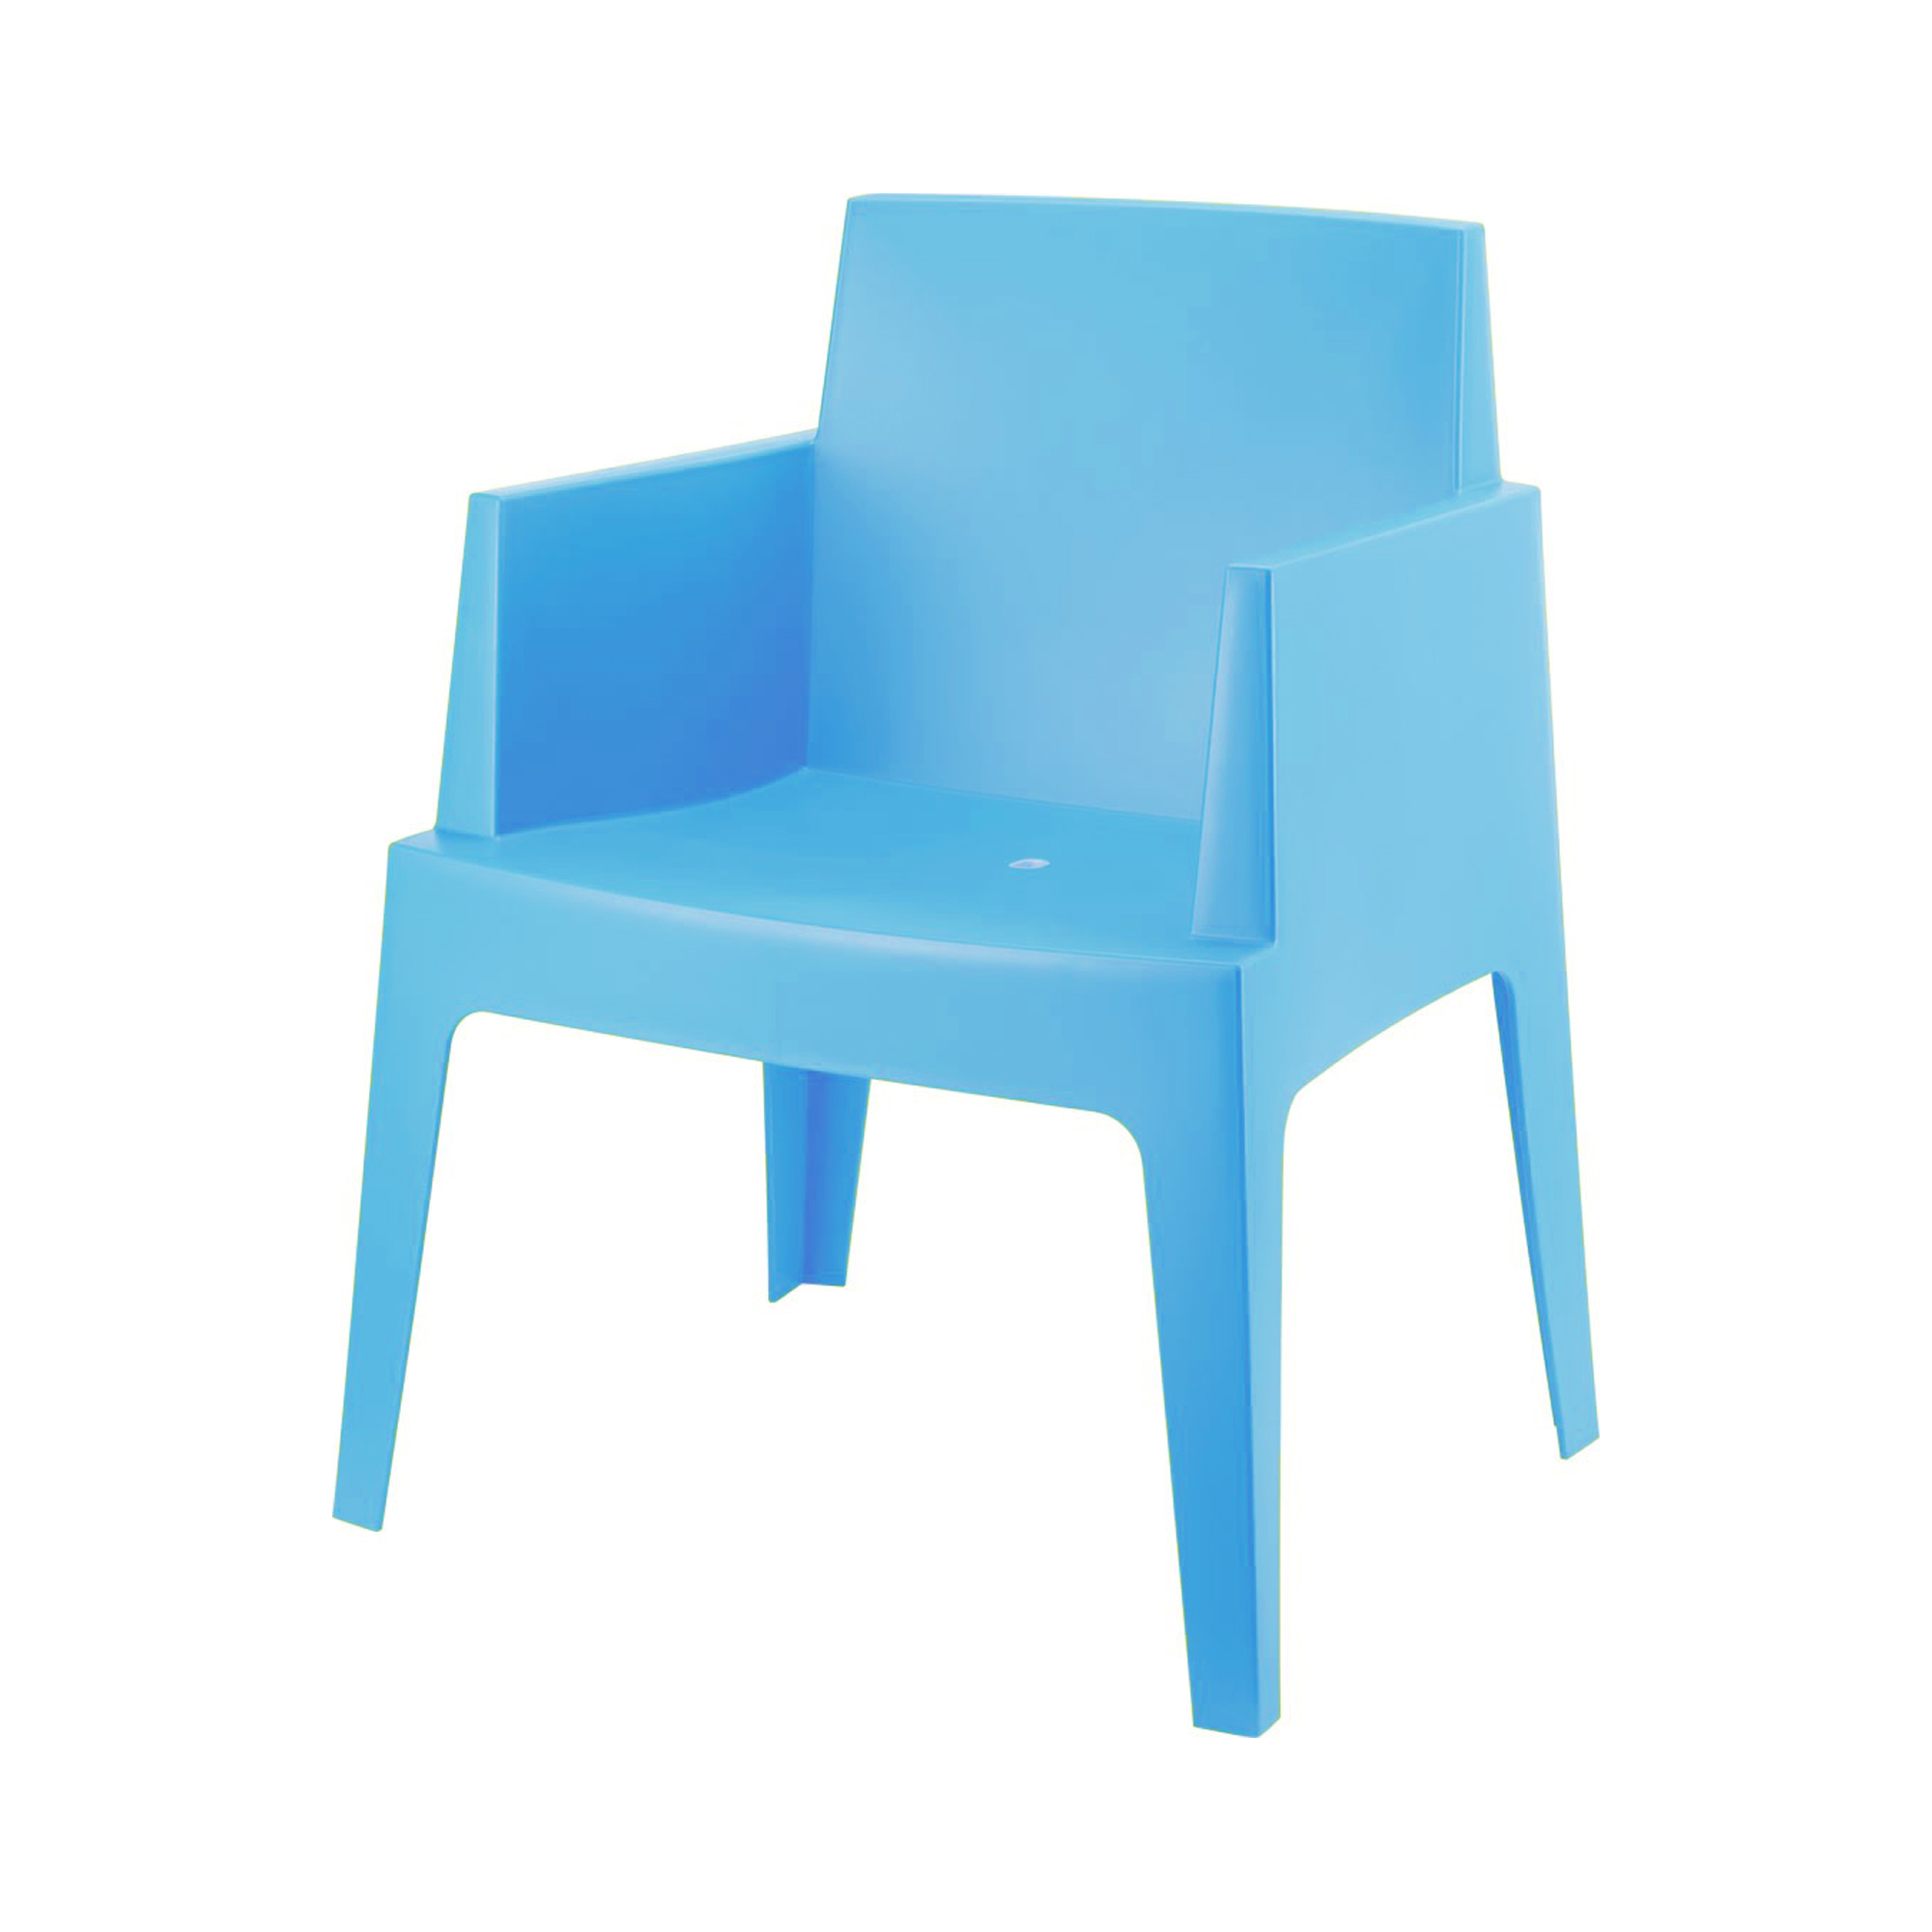 box blauw 2 - Aanbieding: terrasstoelen